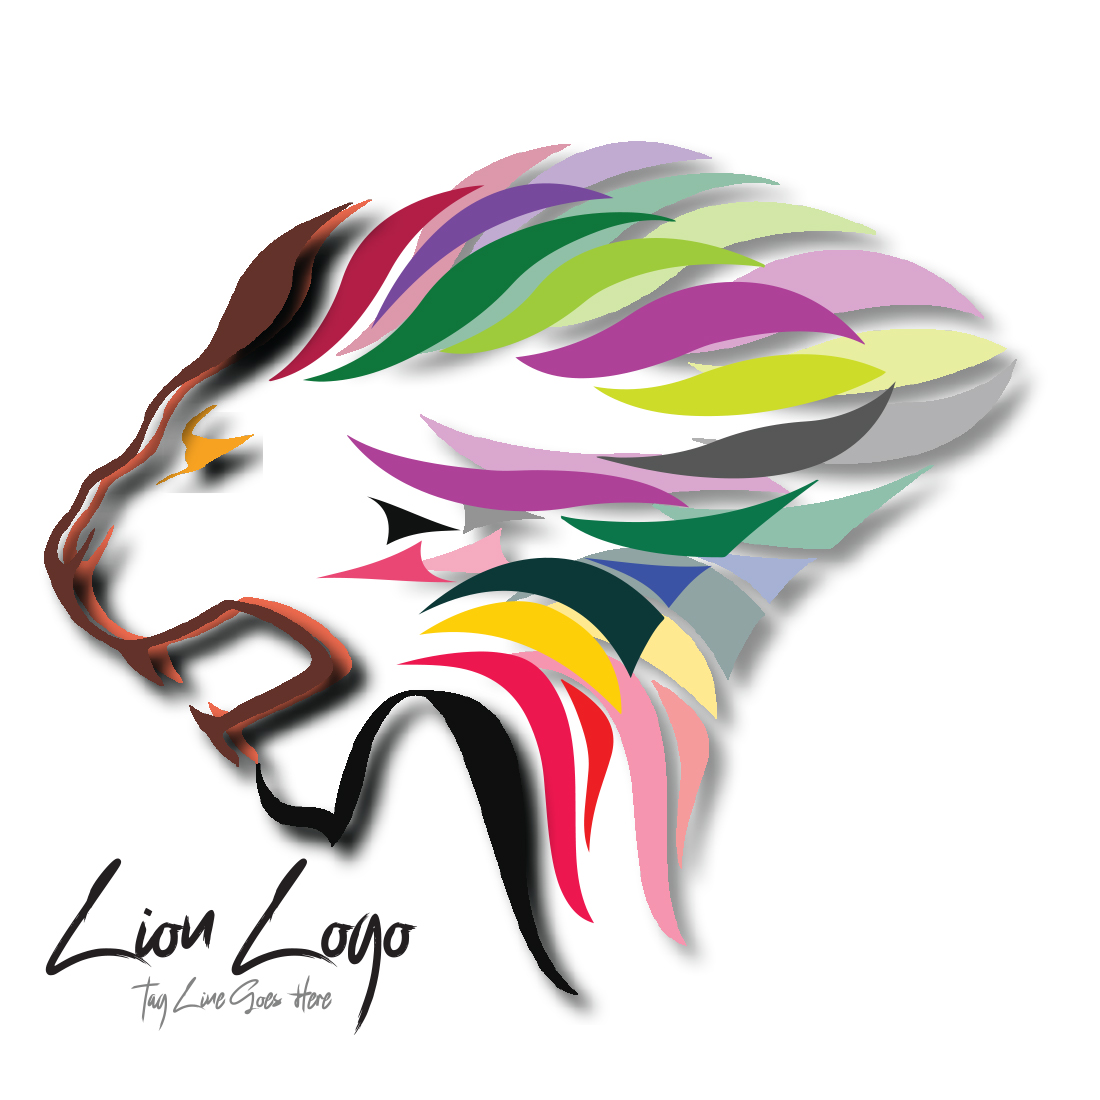 Lion Logo Design cover image.